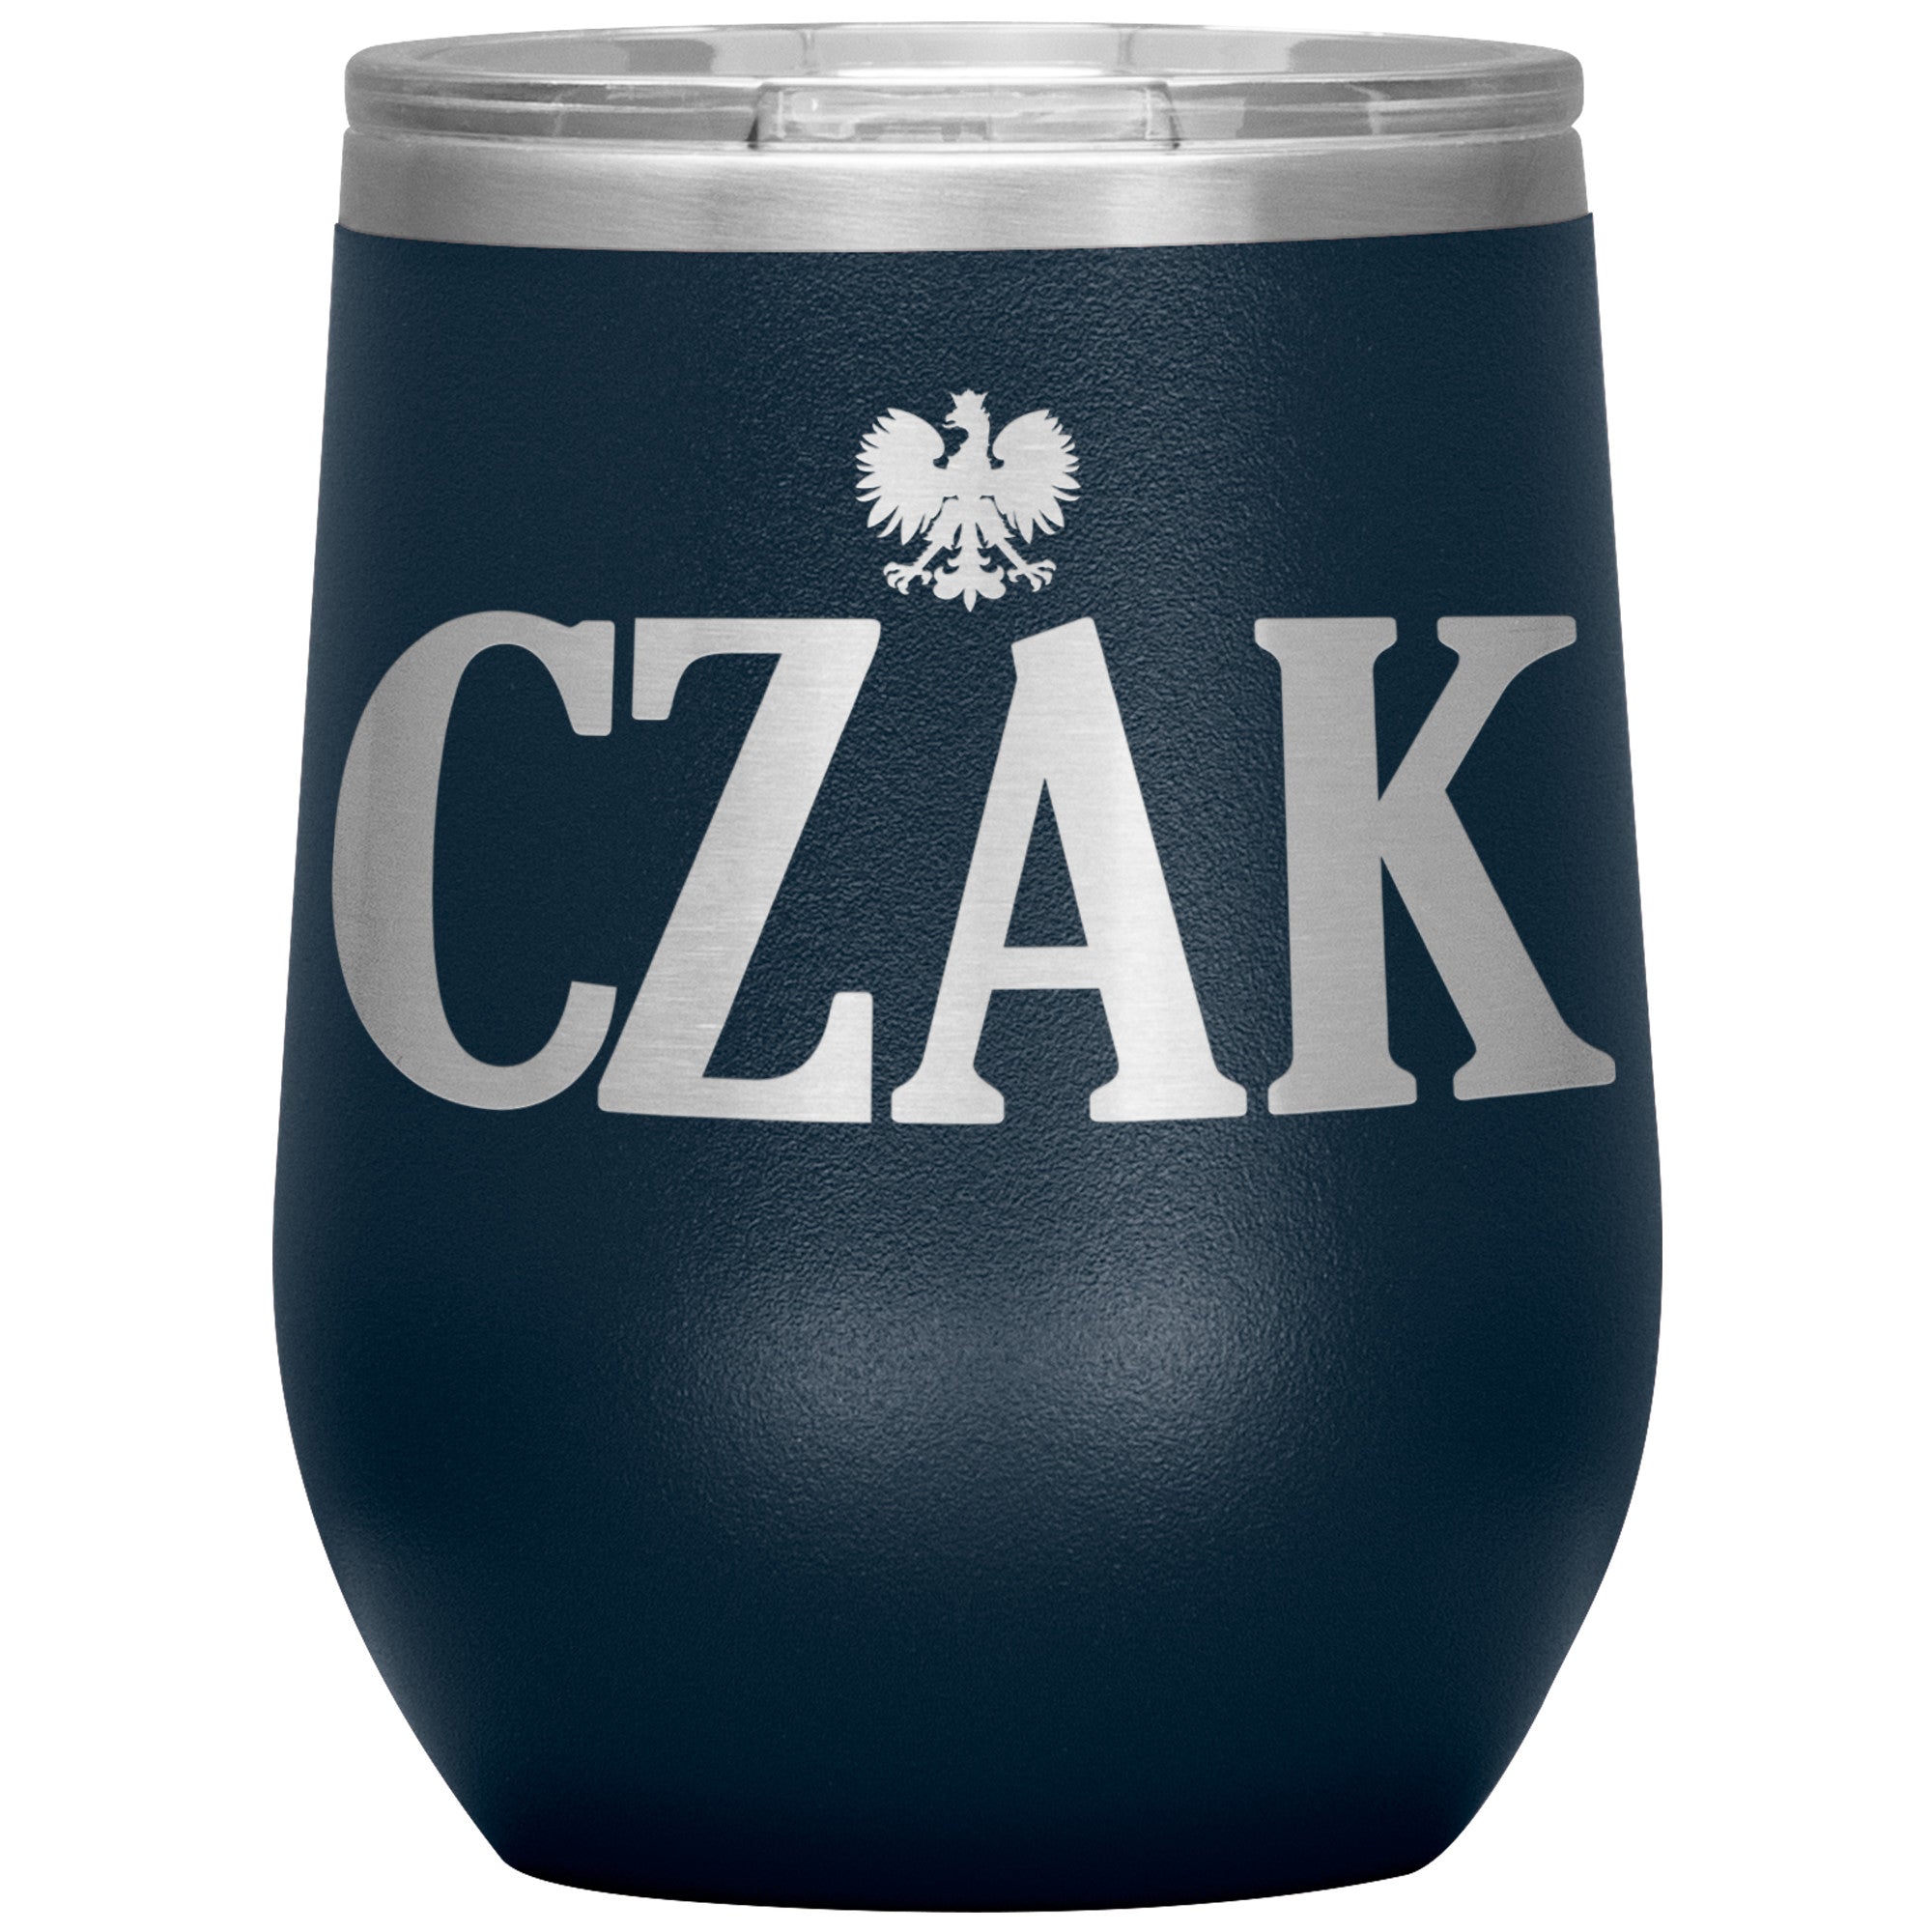 Polish Surnames Ending In CZAK Insulated Wine Tumbler Tumblers teelaunch Navy  